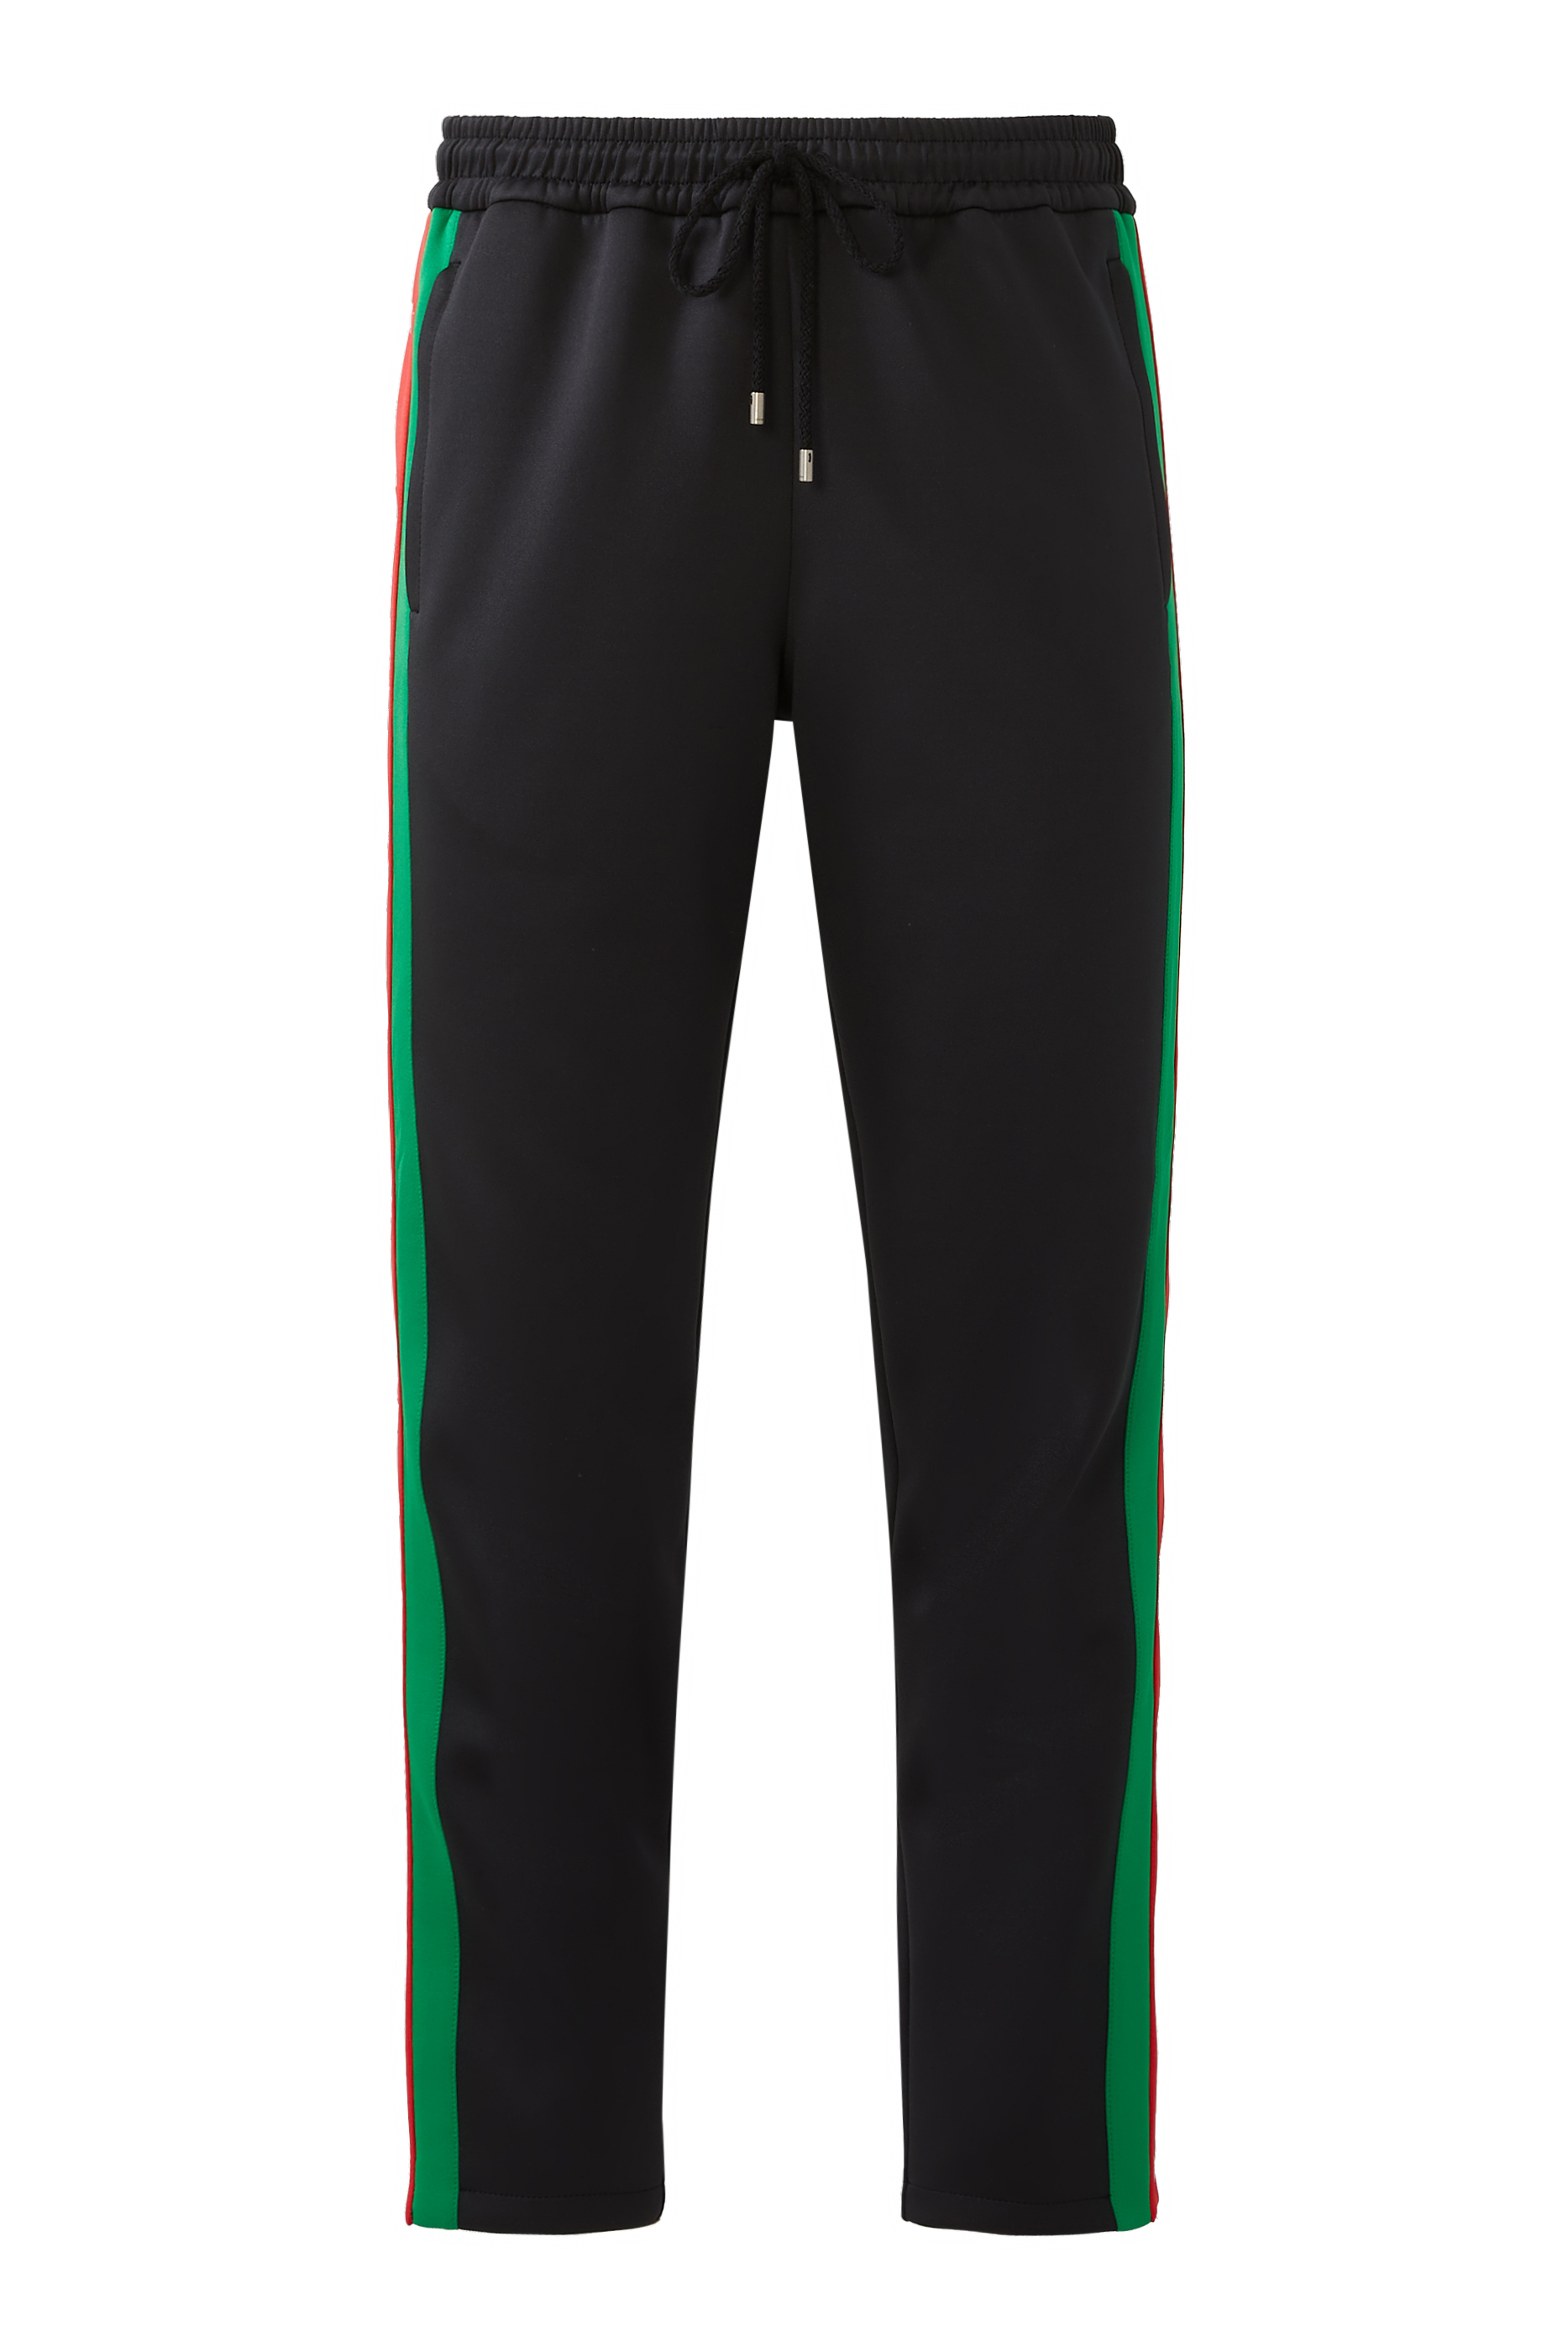 Buy Gucci Neoprene Web Jogging Pants for Mens